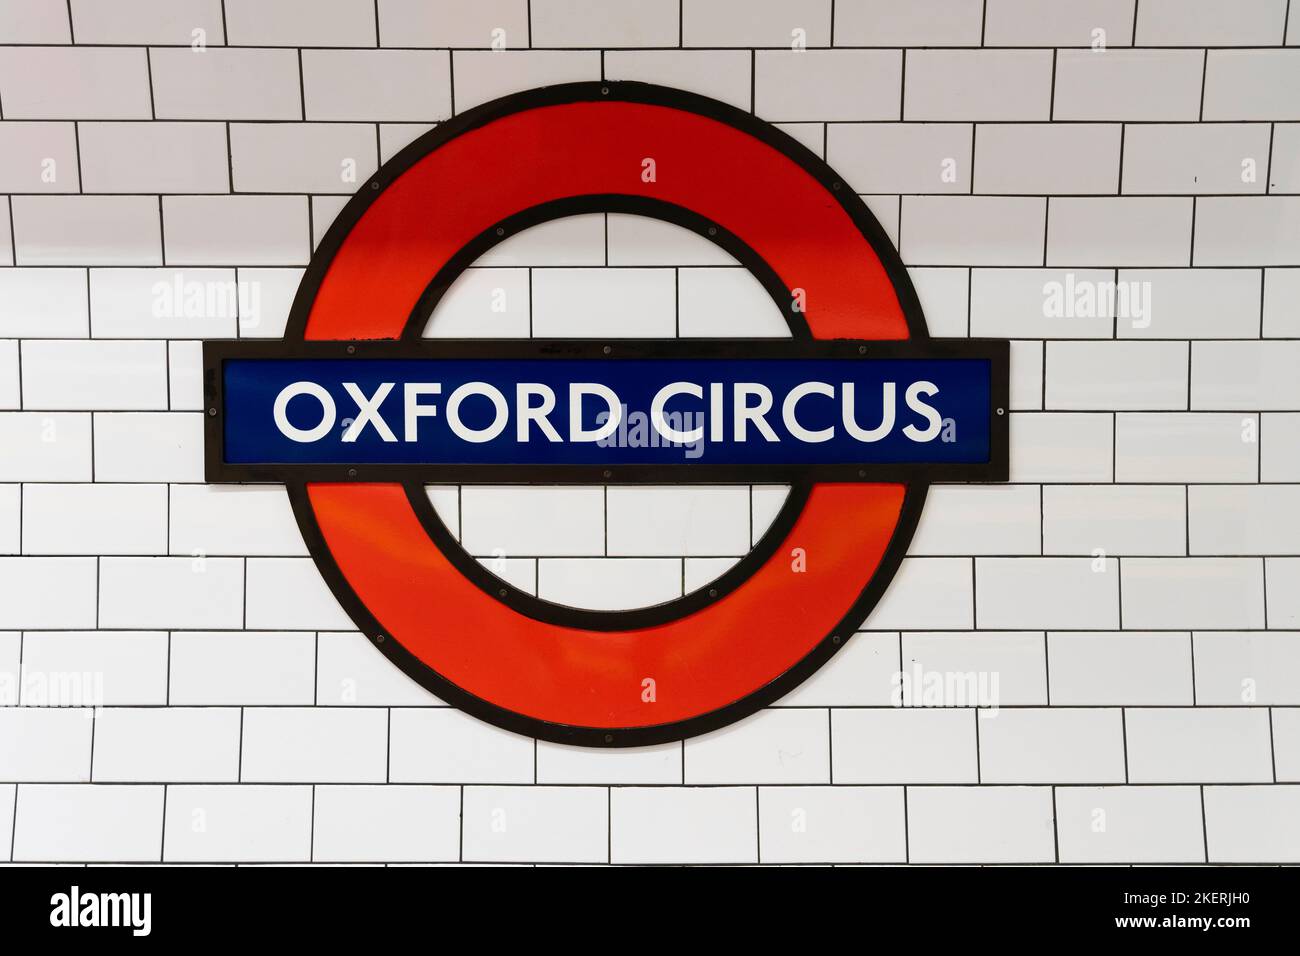 Oxford Circus London Underground logo on a tiled background at Oxford Circus tube station. Theme: TFL, London Underground, public transport Stock Photo